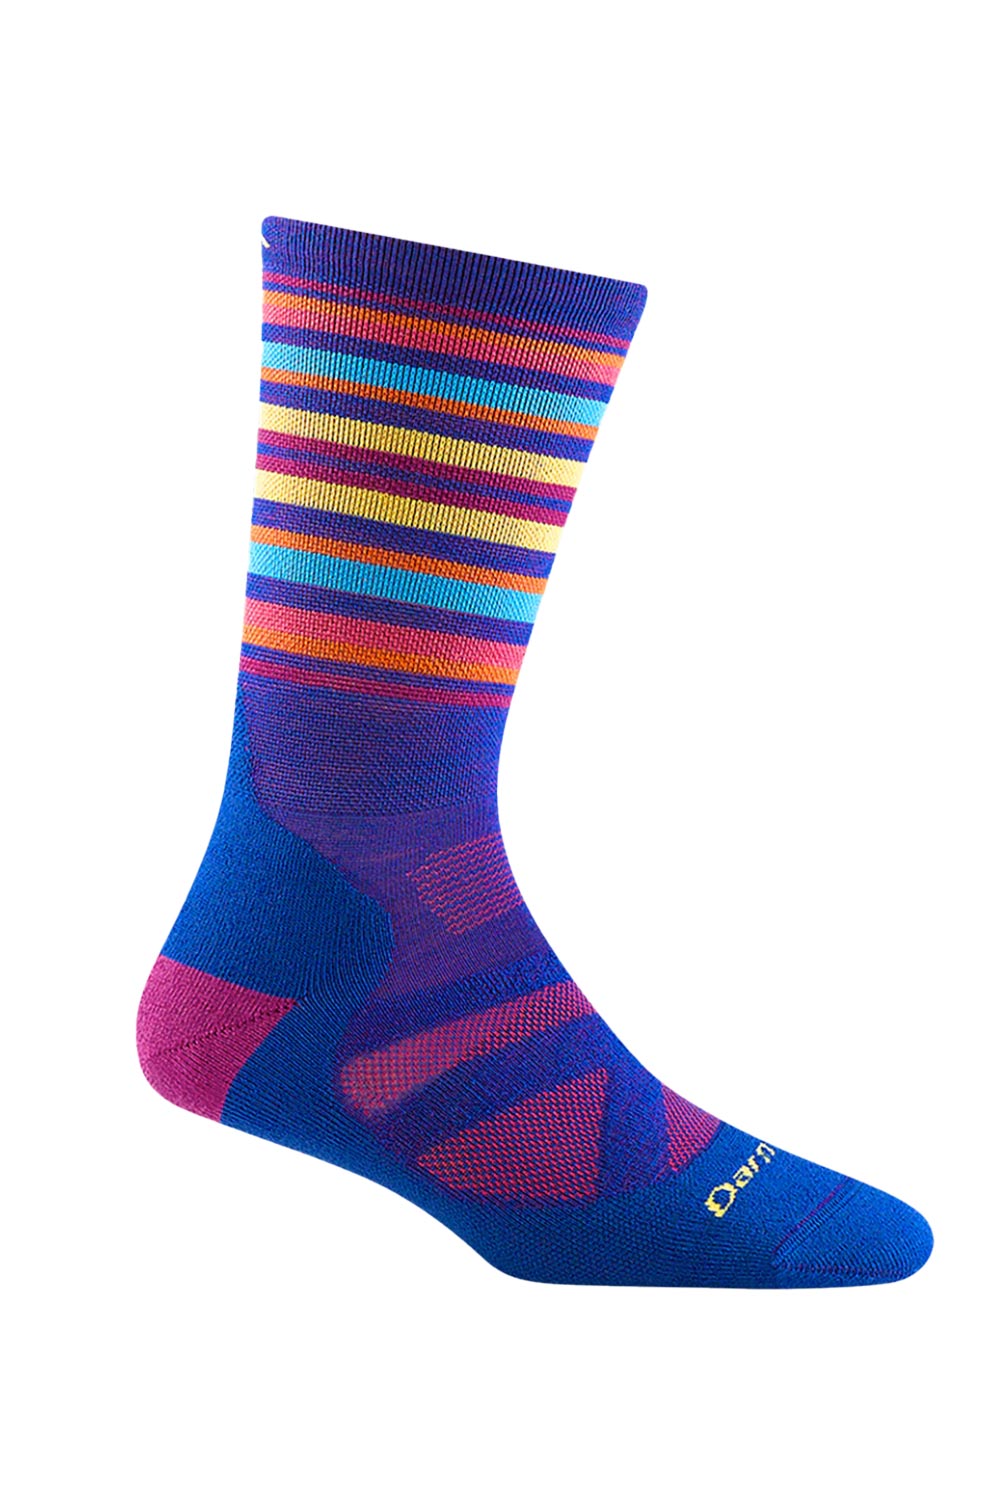 women's Darn Tough xc ski socks, multicolor striped pattern